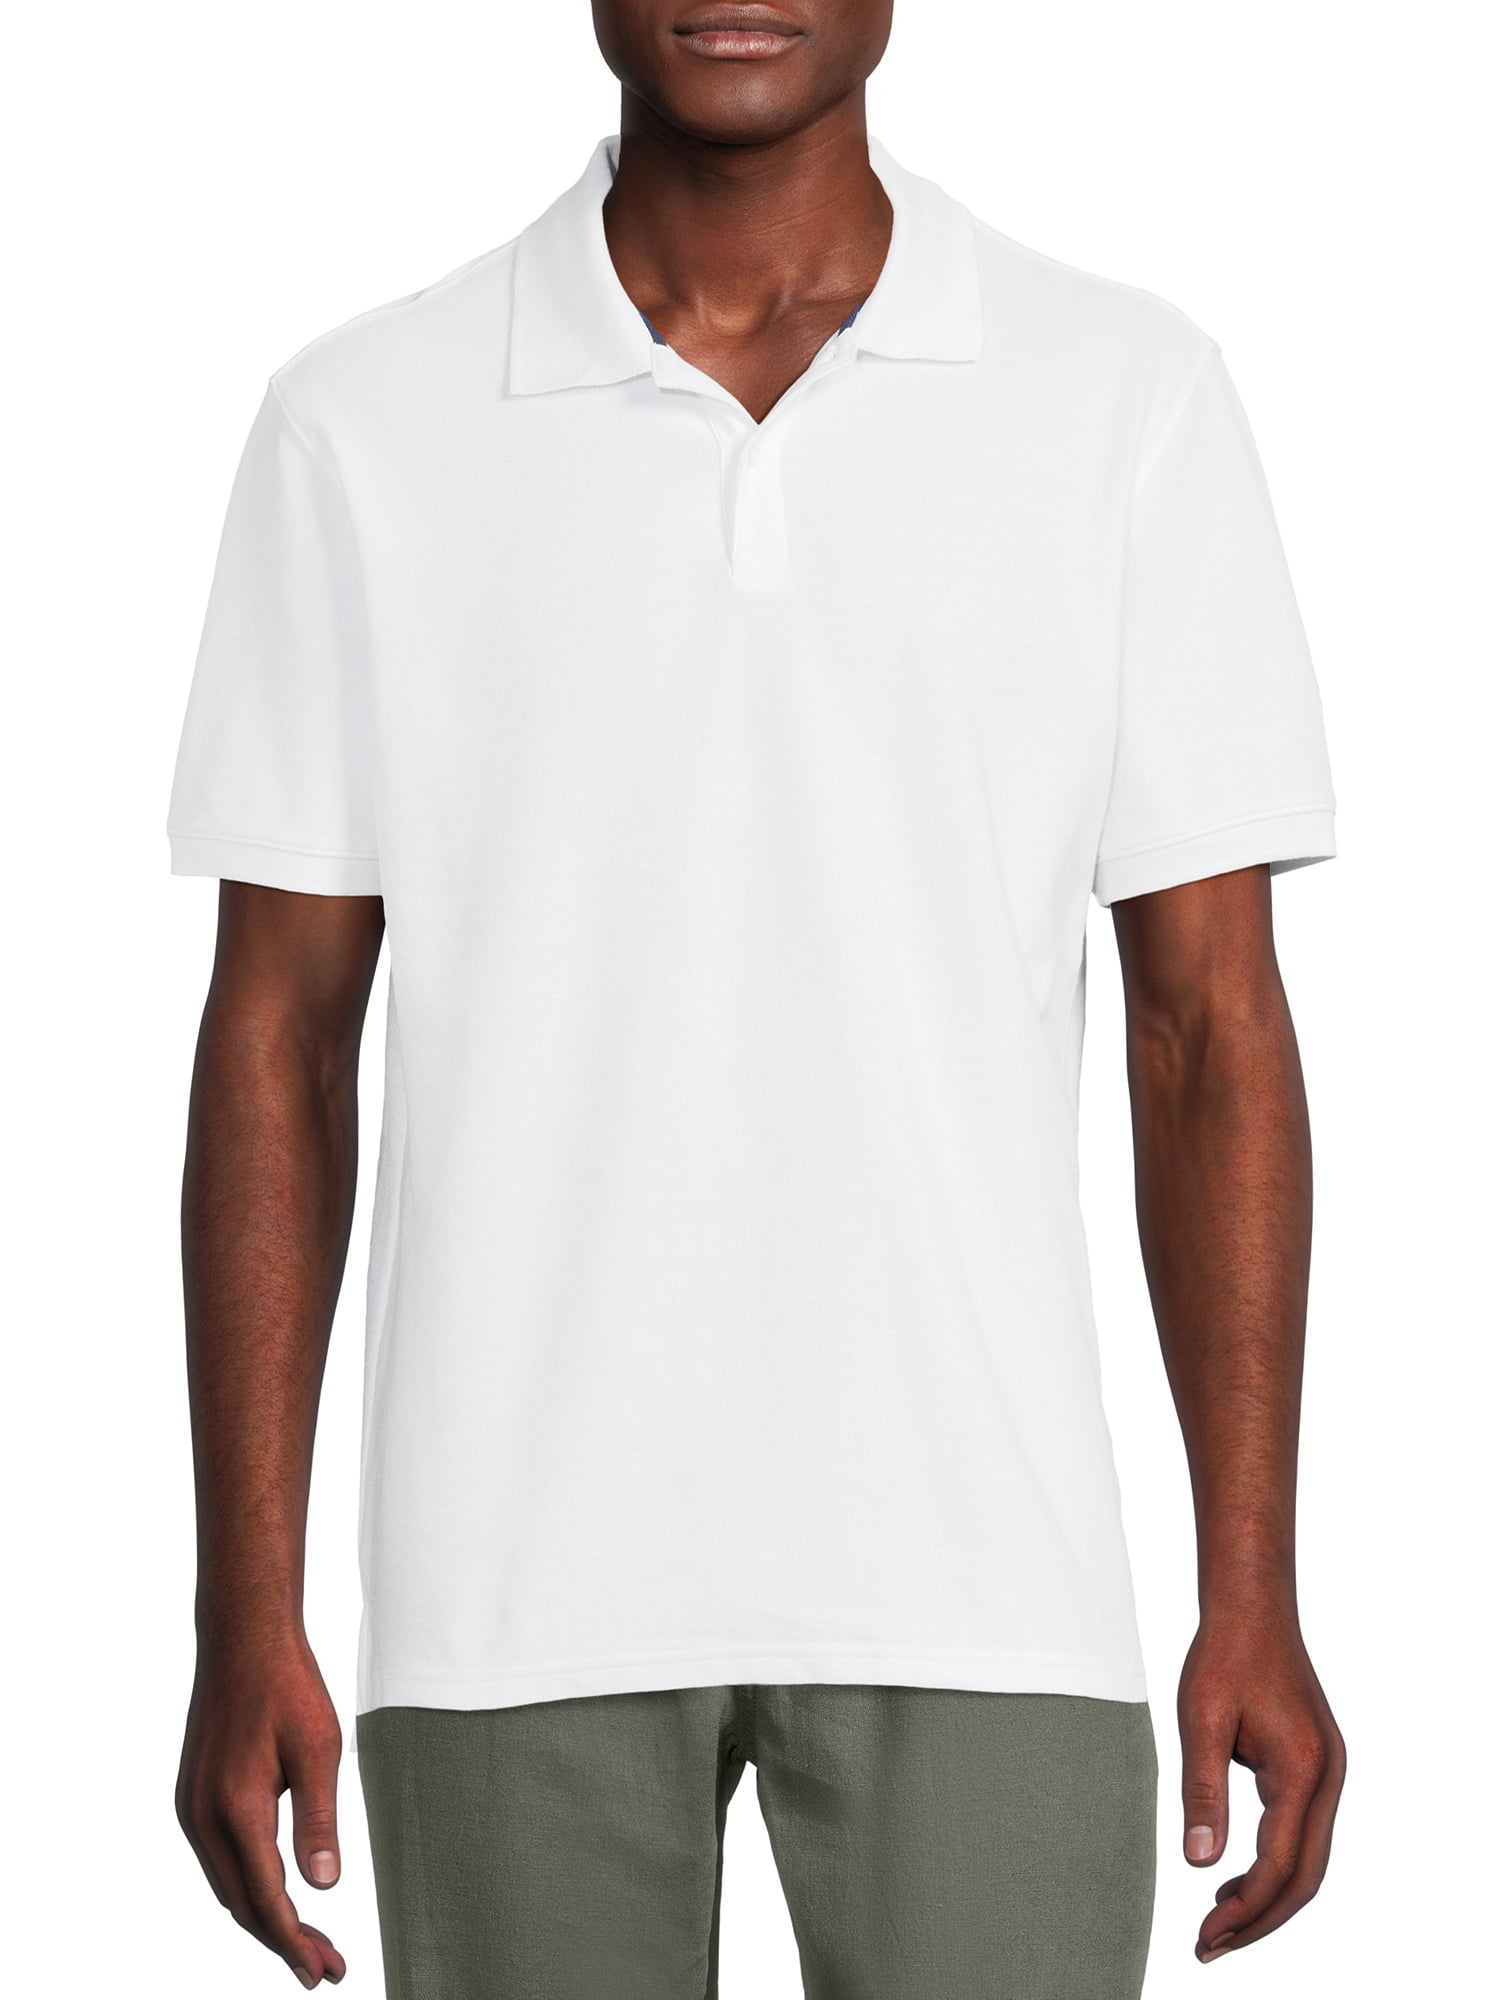 Amount of difference Senator Wonder Nation Young Mens School Uniform Short Sleeve Pique Polo Shirt,  Sizes S-XL - Walmart.com